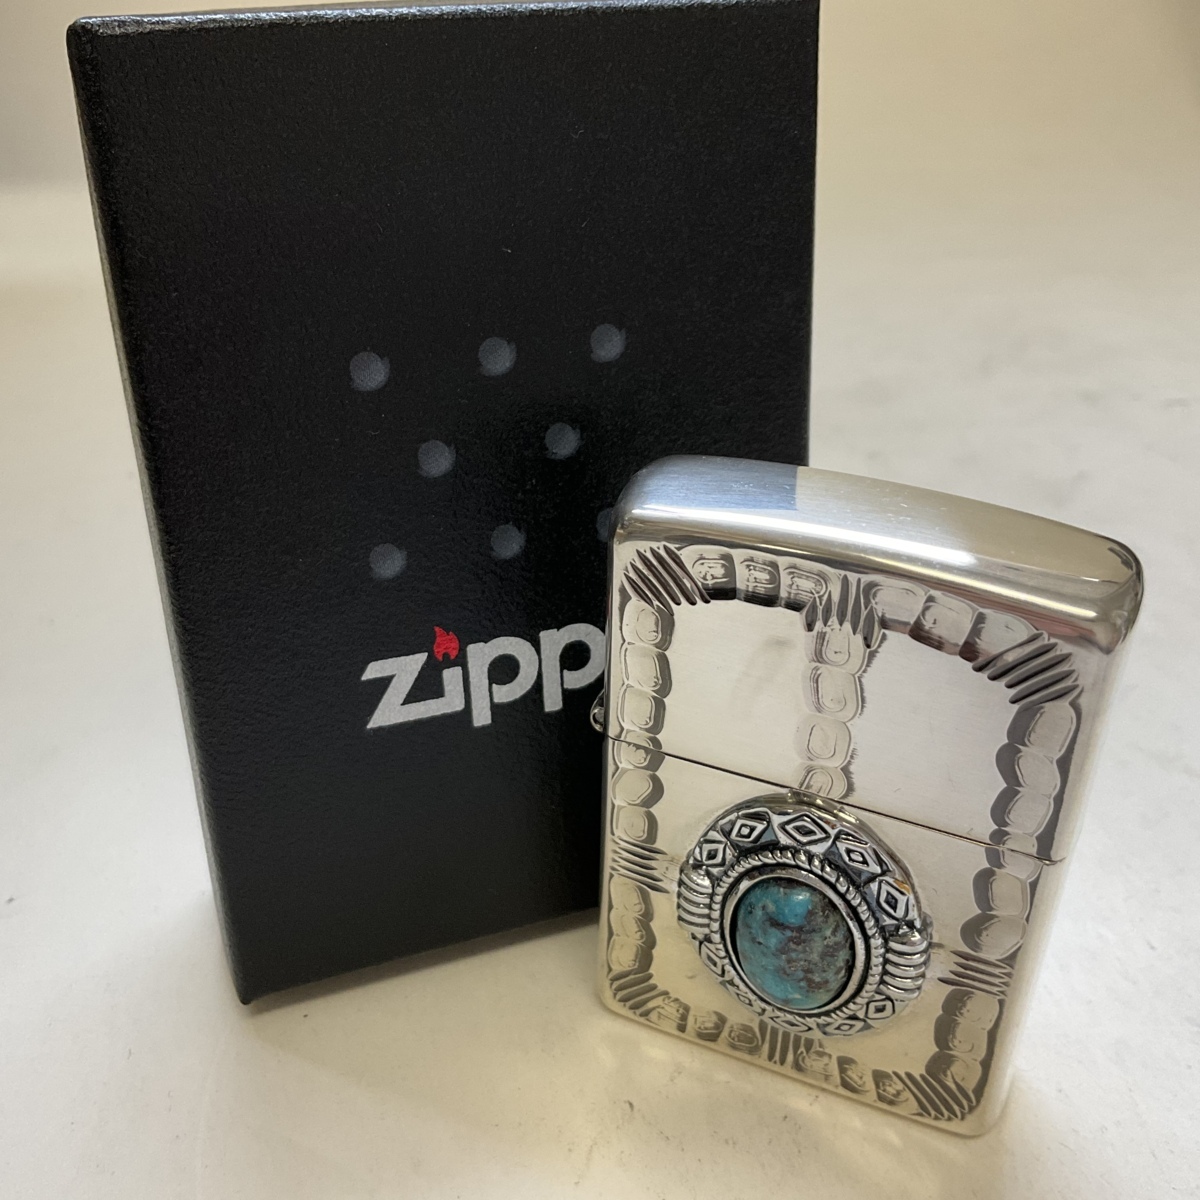 Zippo ジッポー ライター 石付き 開封品 品 J287 Zippo 売買されたオークション情報 Yahooの商品情報をアーカイブ公開 オークファン Aucfan Com